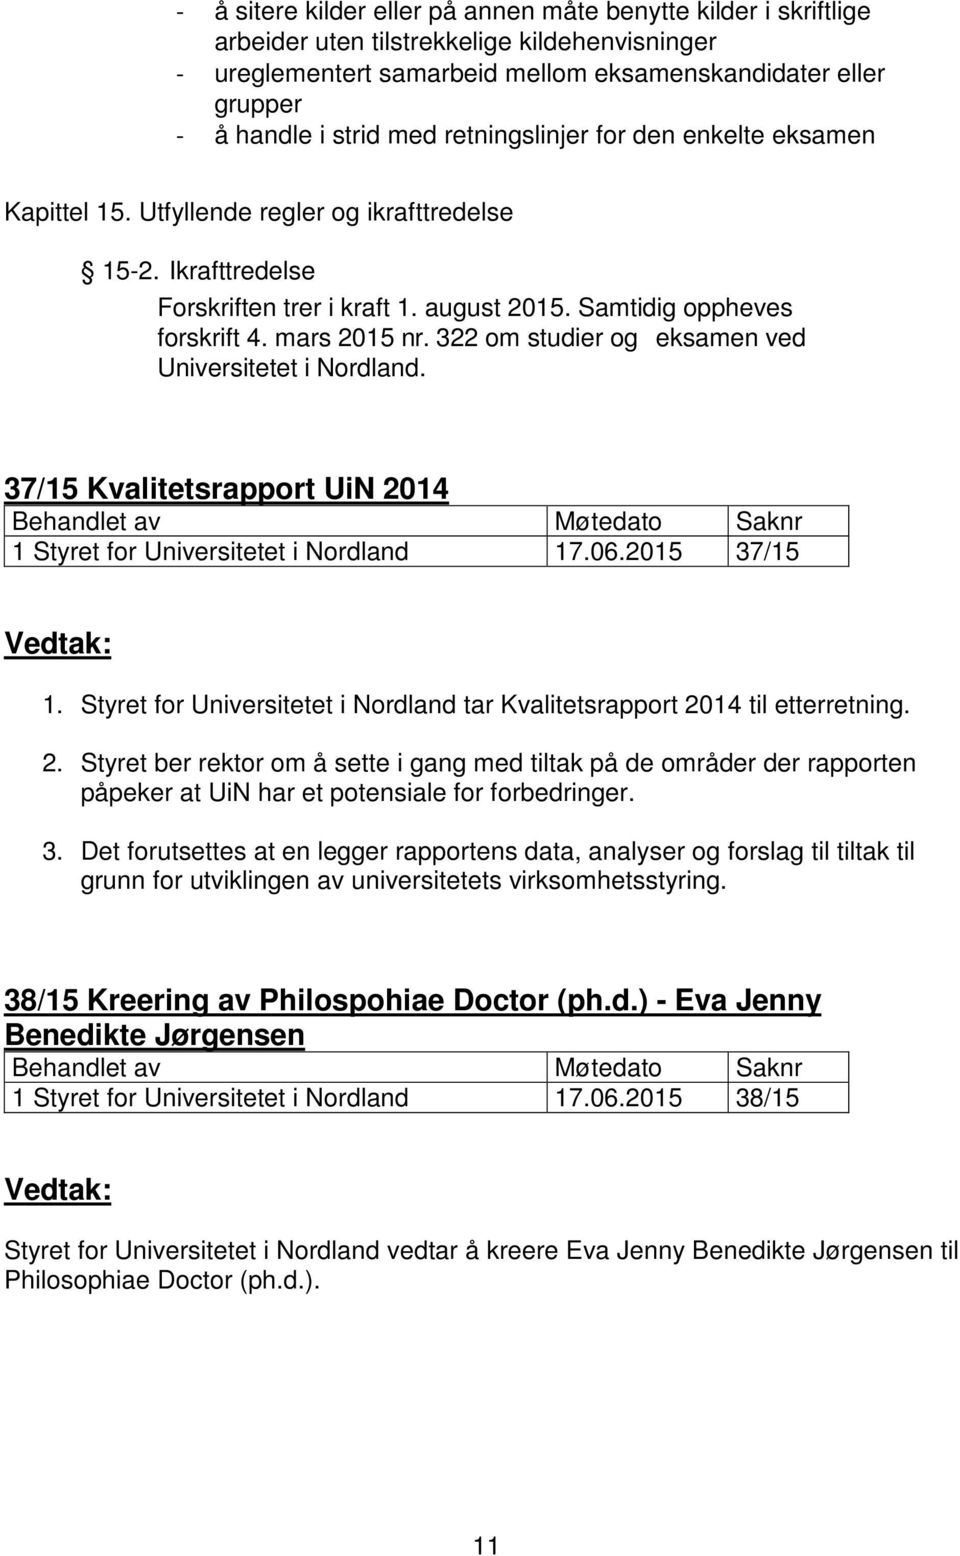 322 om studier og eksamen ved Universitetet i Nordland. 37/15 Kvalitetsrapport UiN 2014 1 Styret for Universitetet i Nordland 17.06.2015 37/15 1.